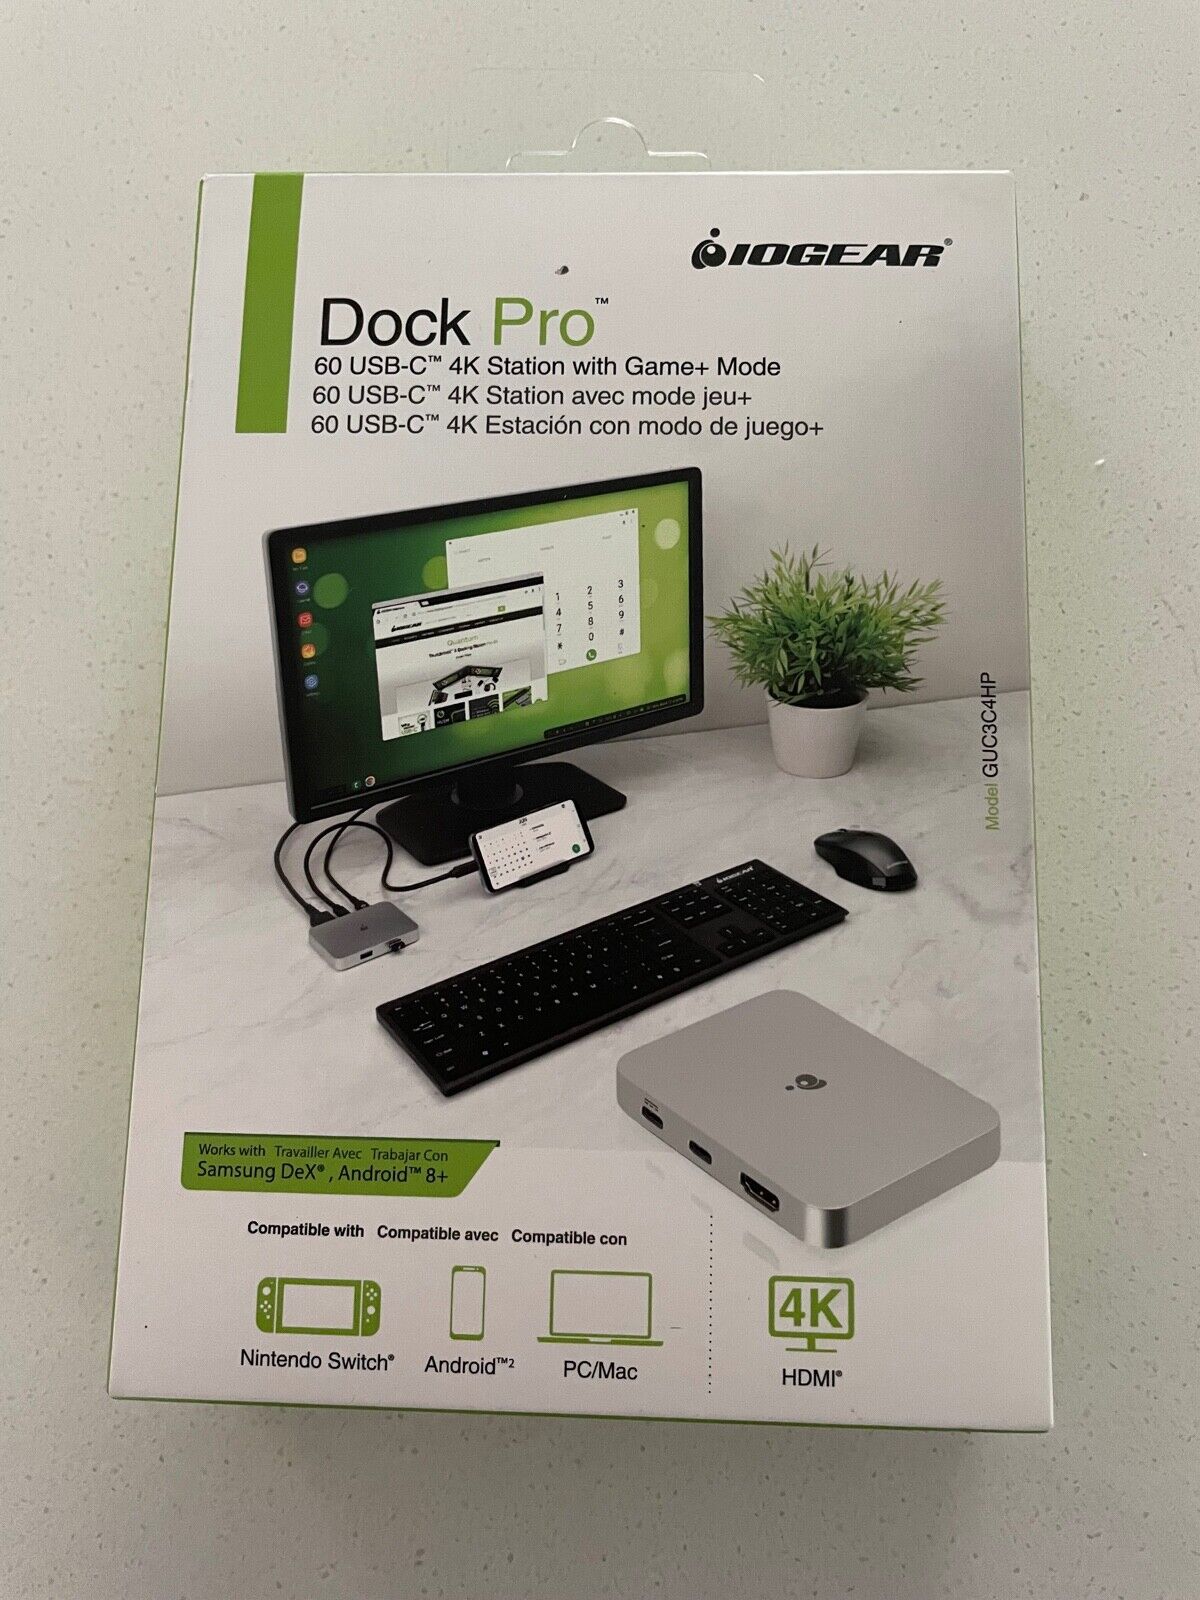 Iogear “Dock Pro” 4K 60W USB-C Dock Station- Brand New/Sealed